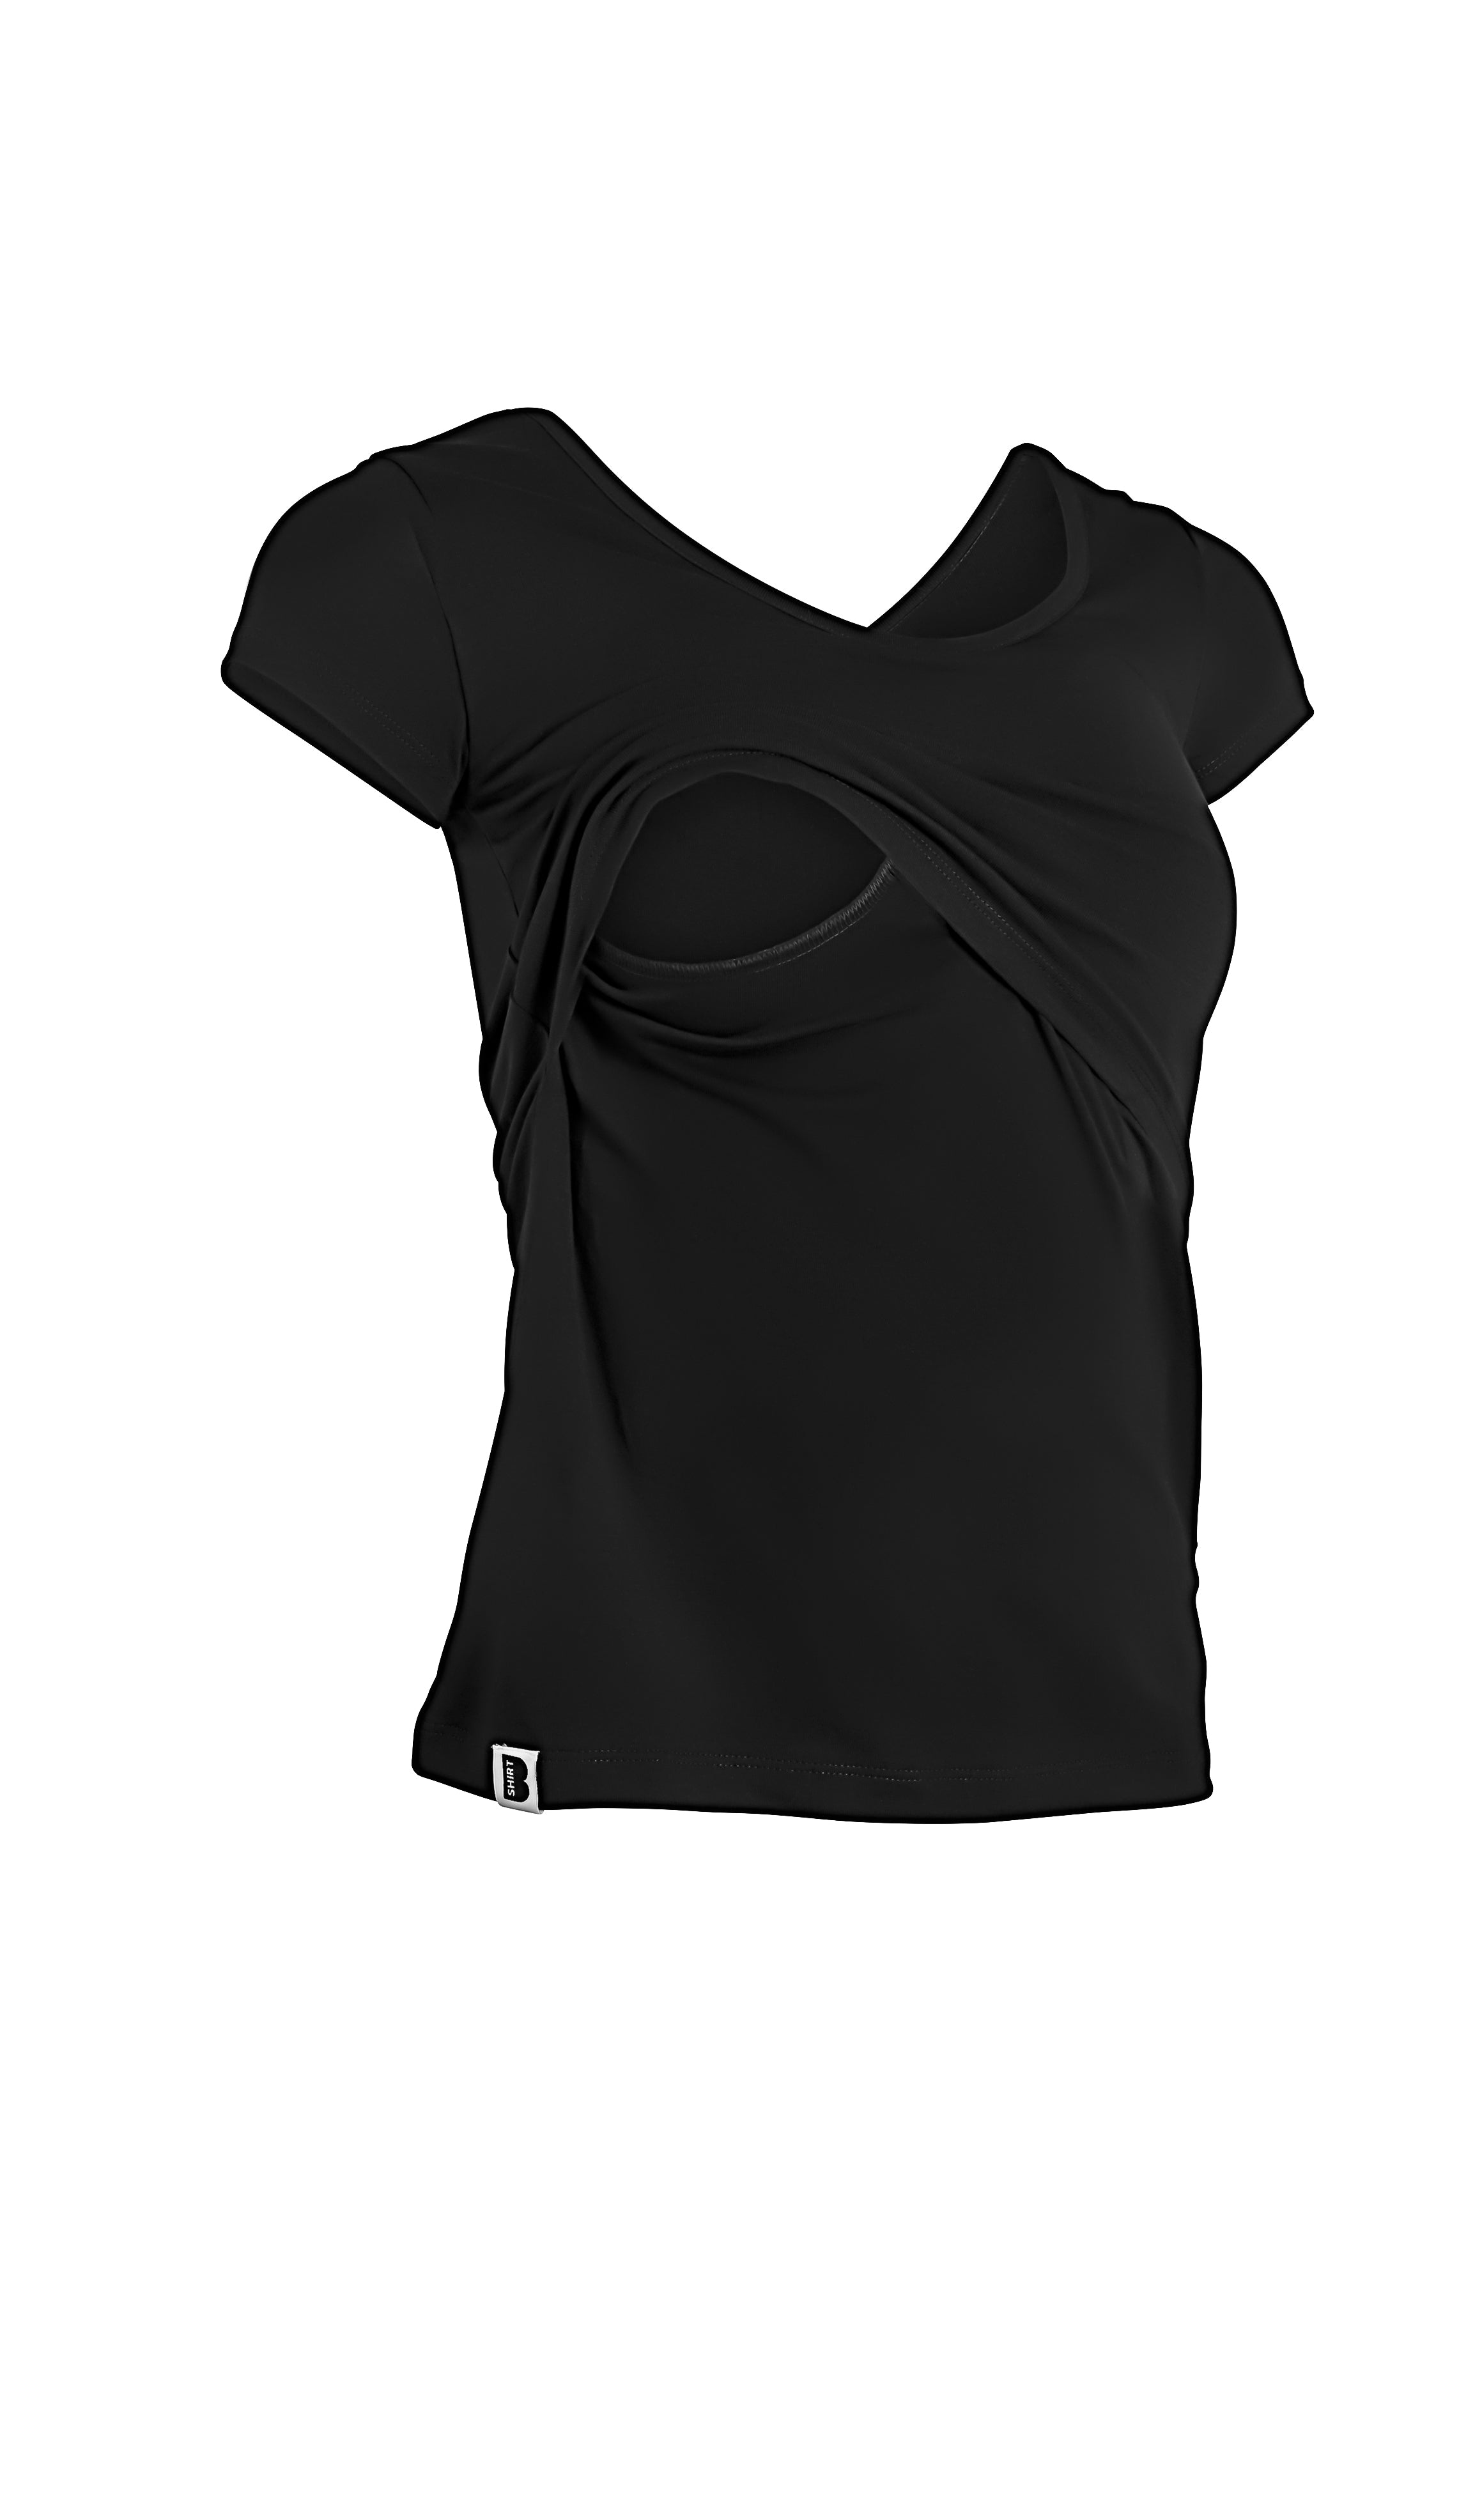 Bshirt Nursing short sleeve t-shirt in Black